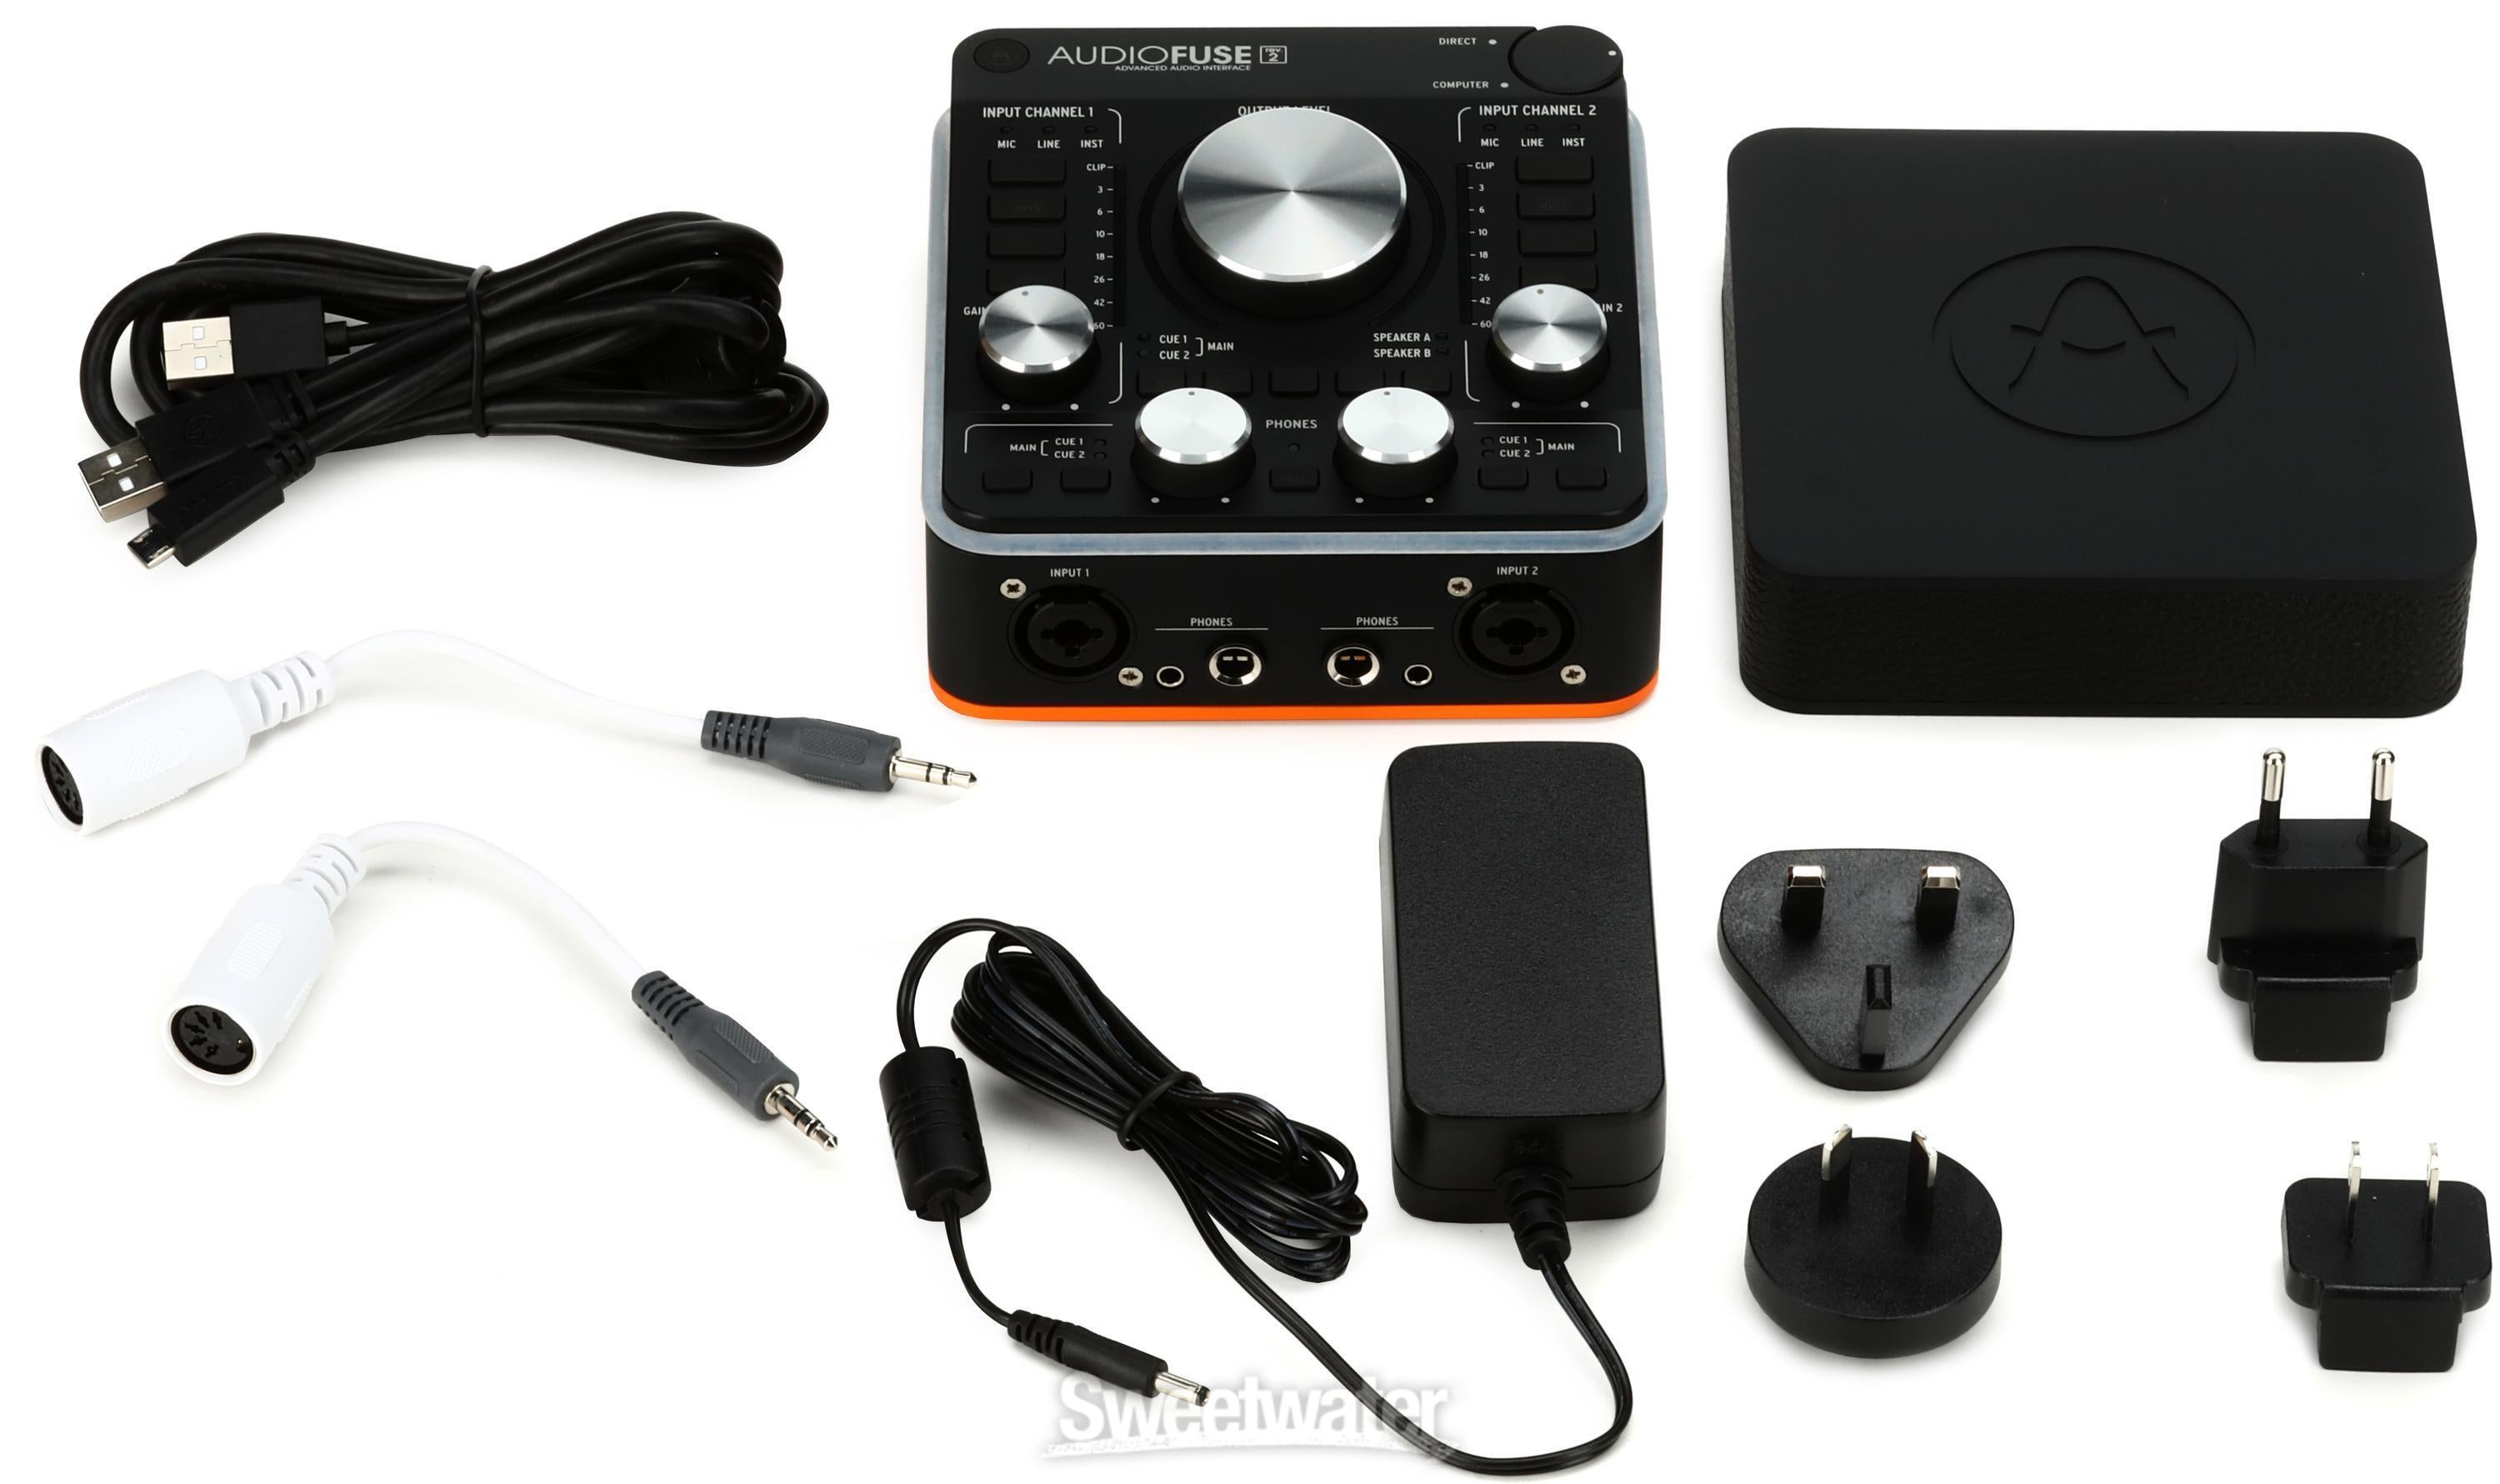 Arturia AudioFuse Rev2 USB Audio Interface - Black